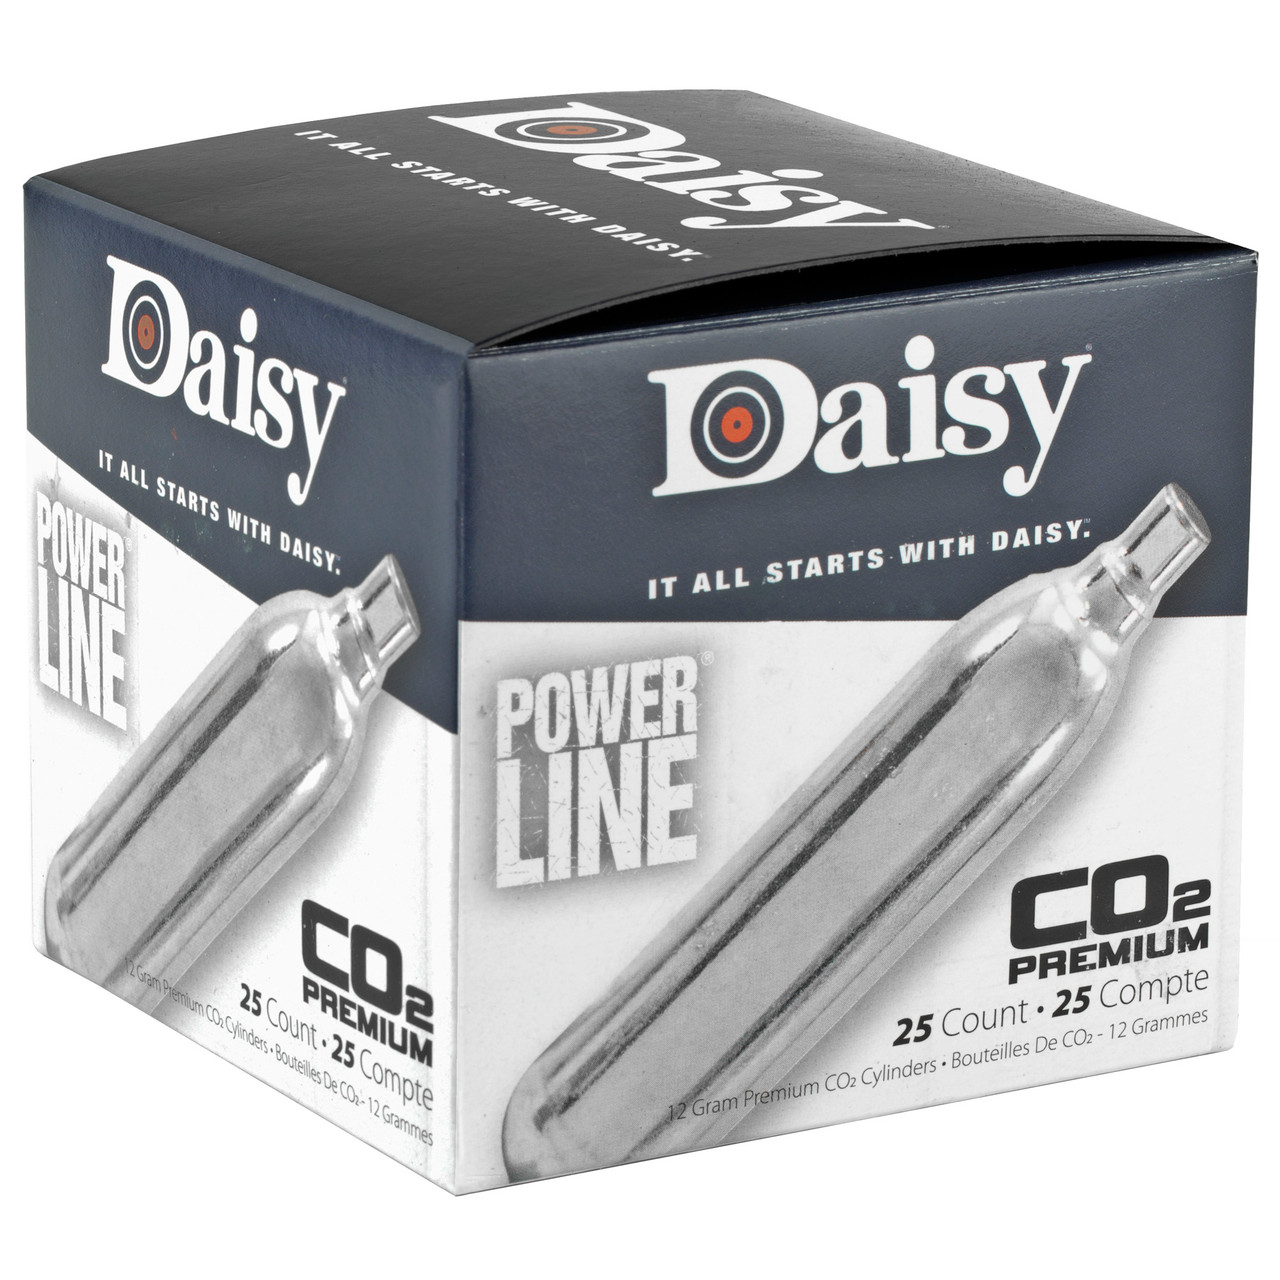 Daisy 997025-604 #7025 Co2 Cylinders 25/bx